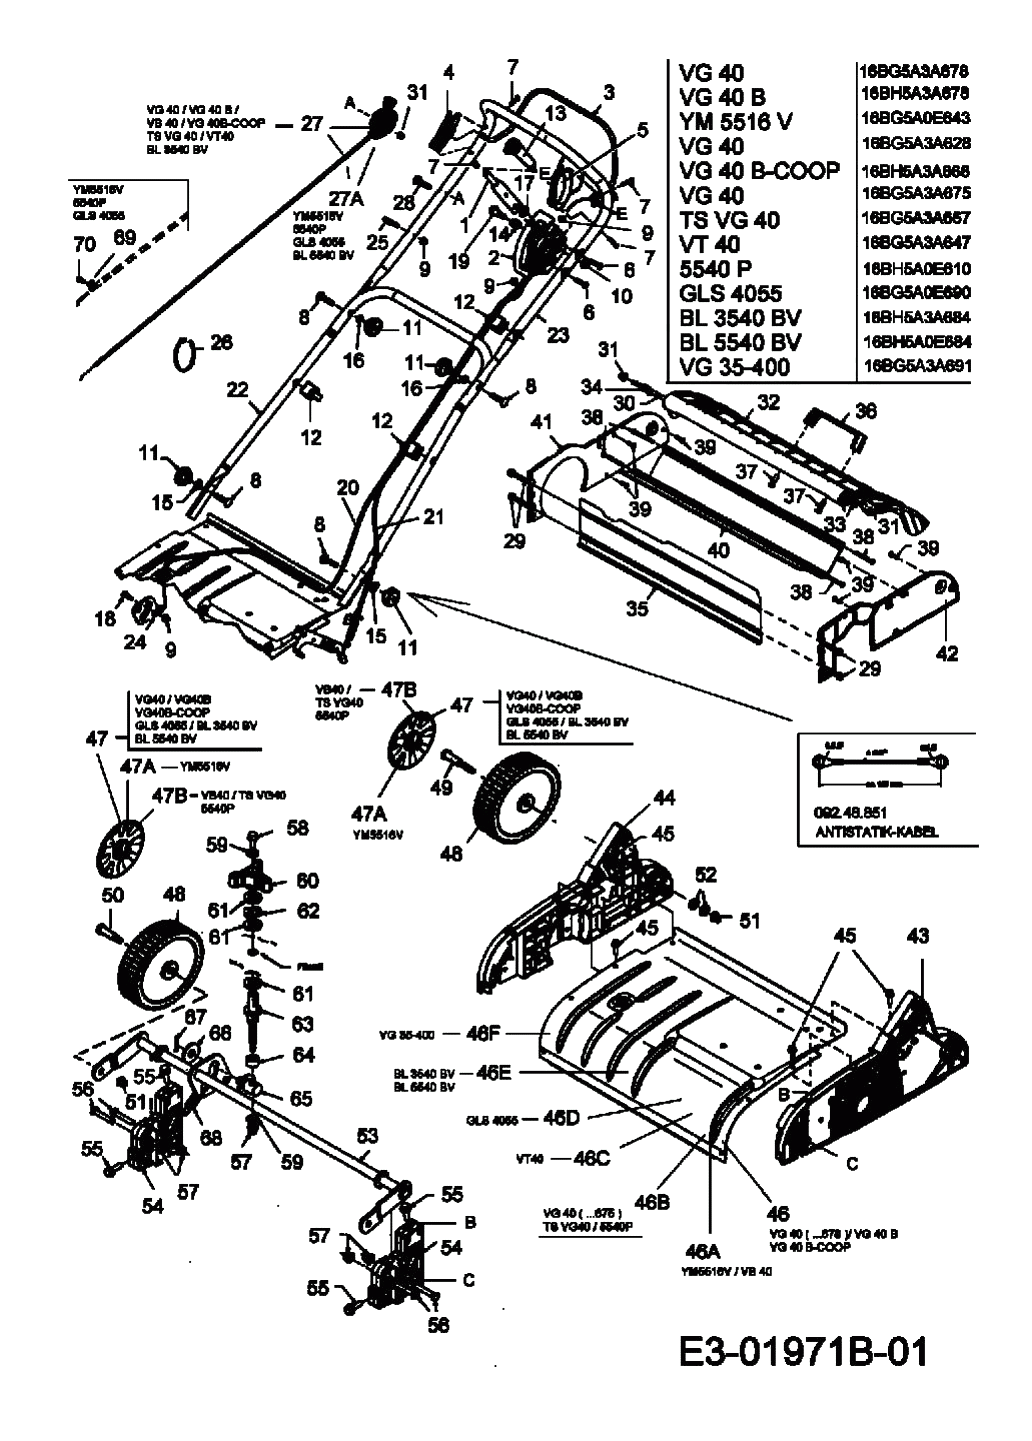 MTD Артикул 16BH5A0E678 (год выпуска 2007). Ручка, регулятор высоты, колеса